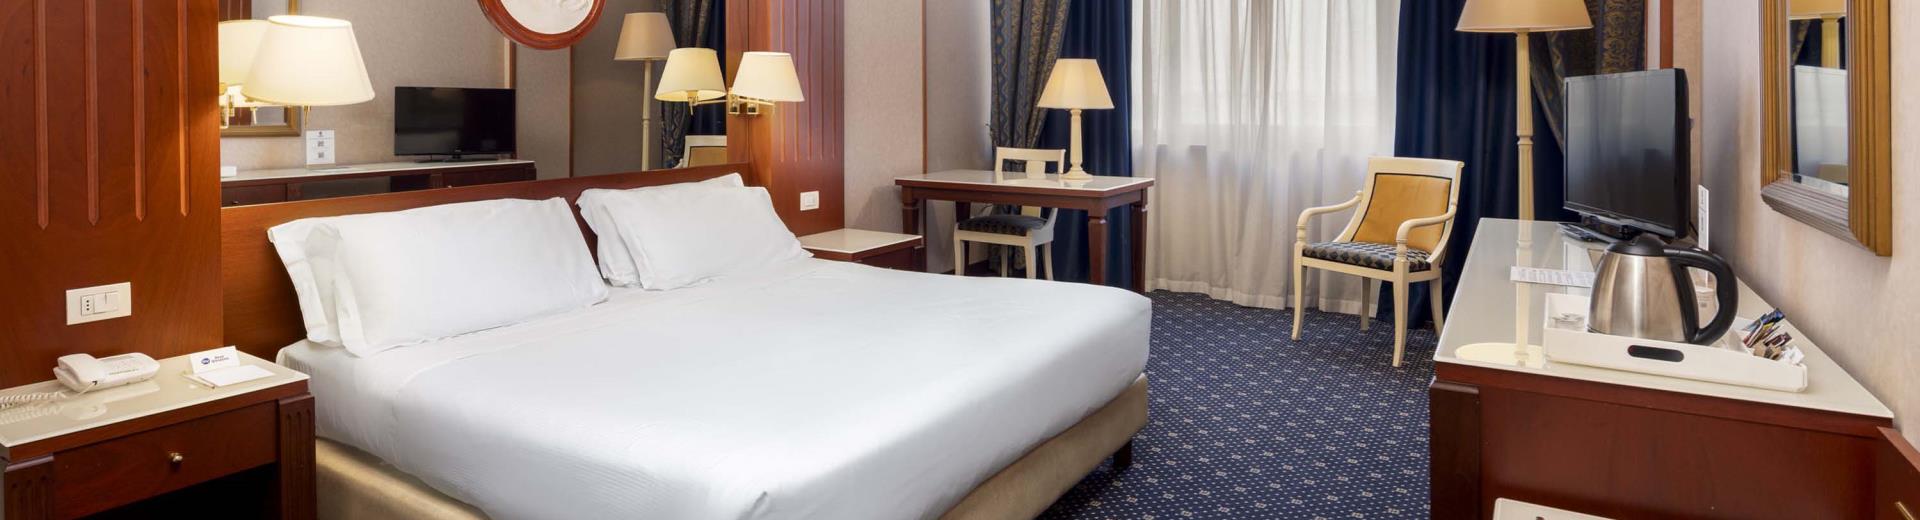 BW CTC Hotel Verona - classic room